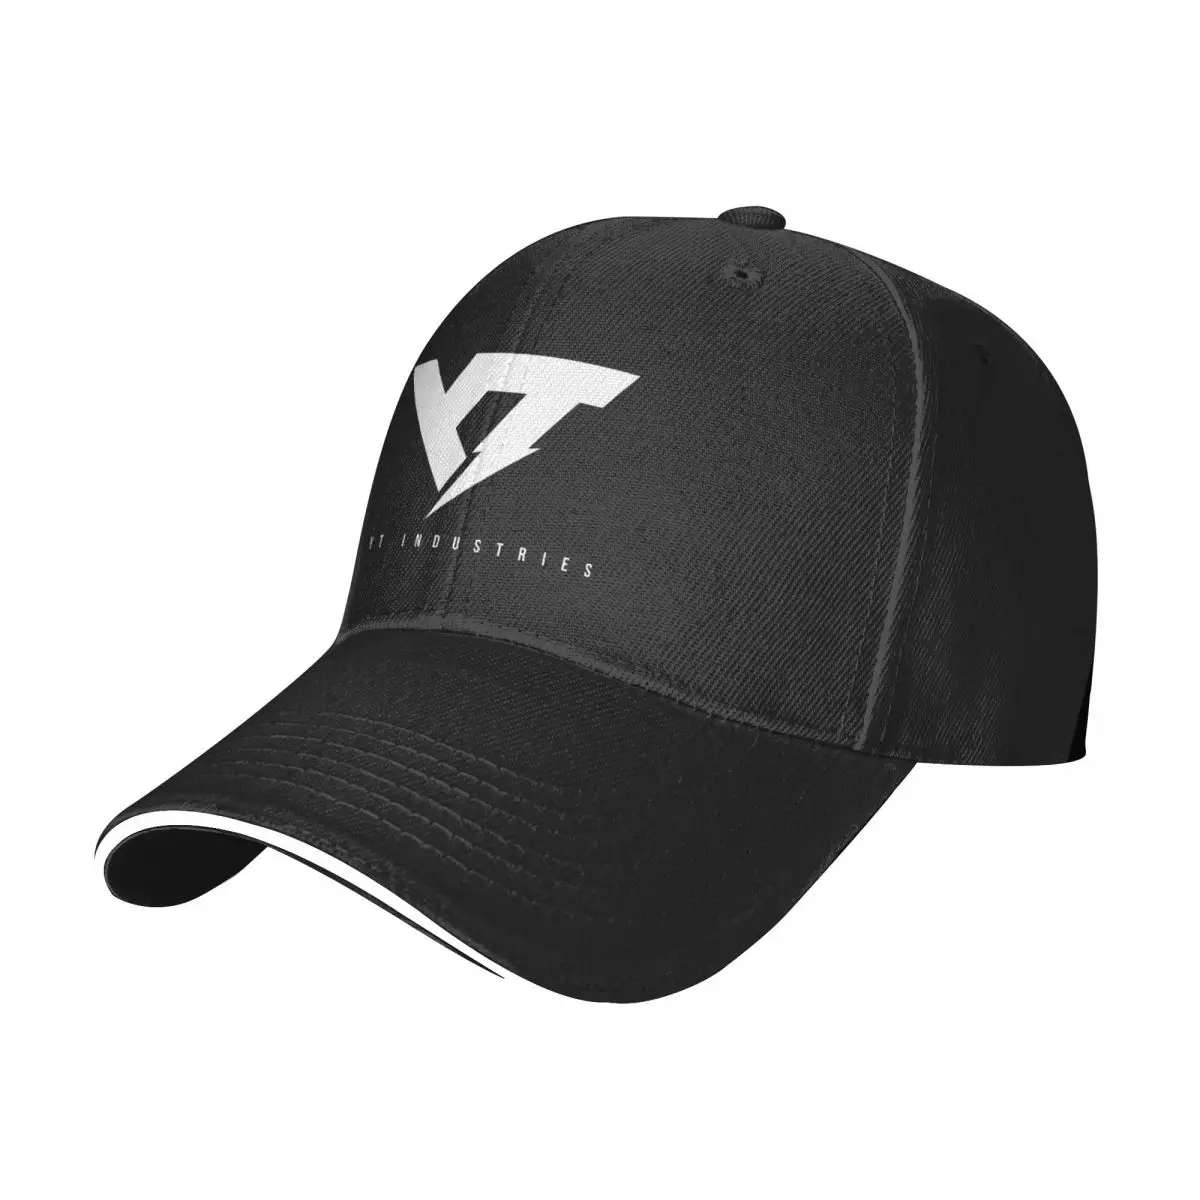 

Yt Industries Men and Women Fashion Baseball Caps Casual Snap Caps Summer Sun Visor Hats